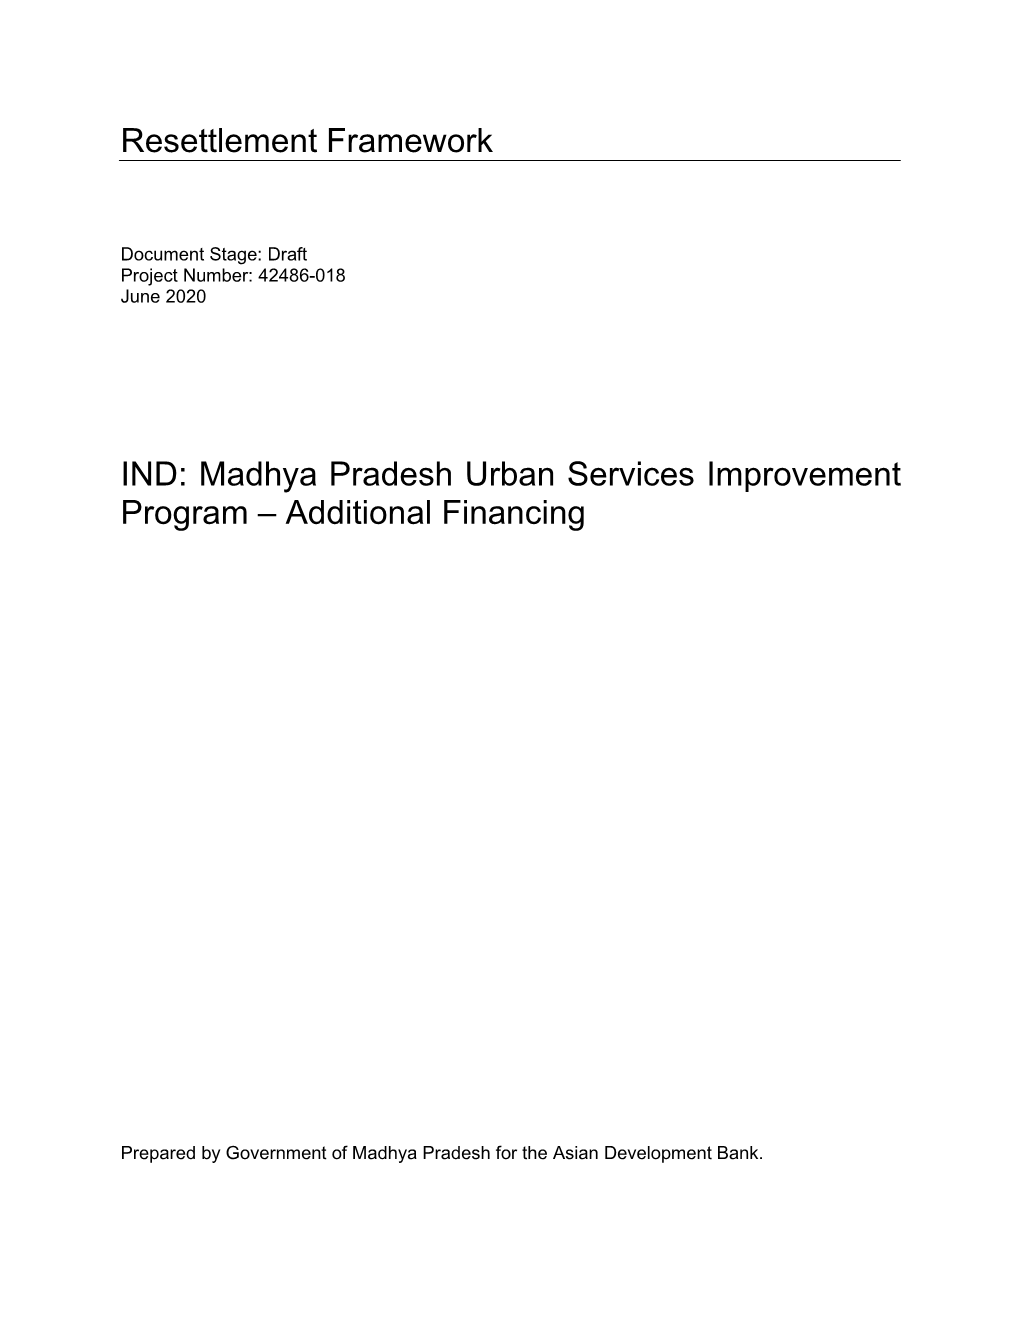 Madhya Pradesh Urban Services Improvement Project